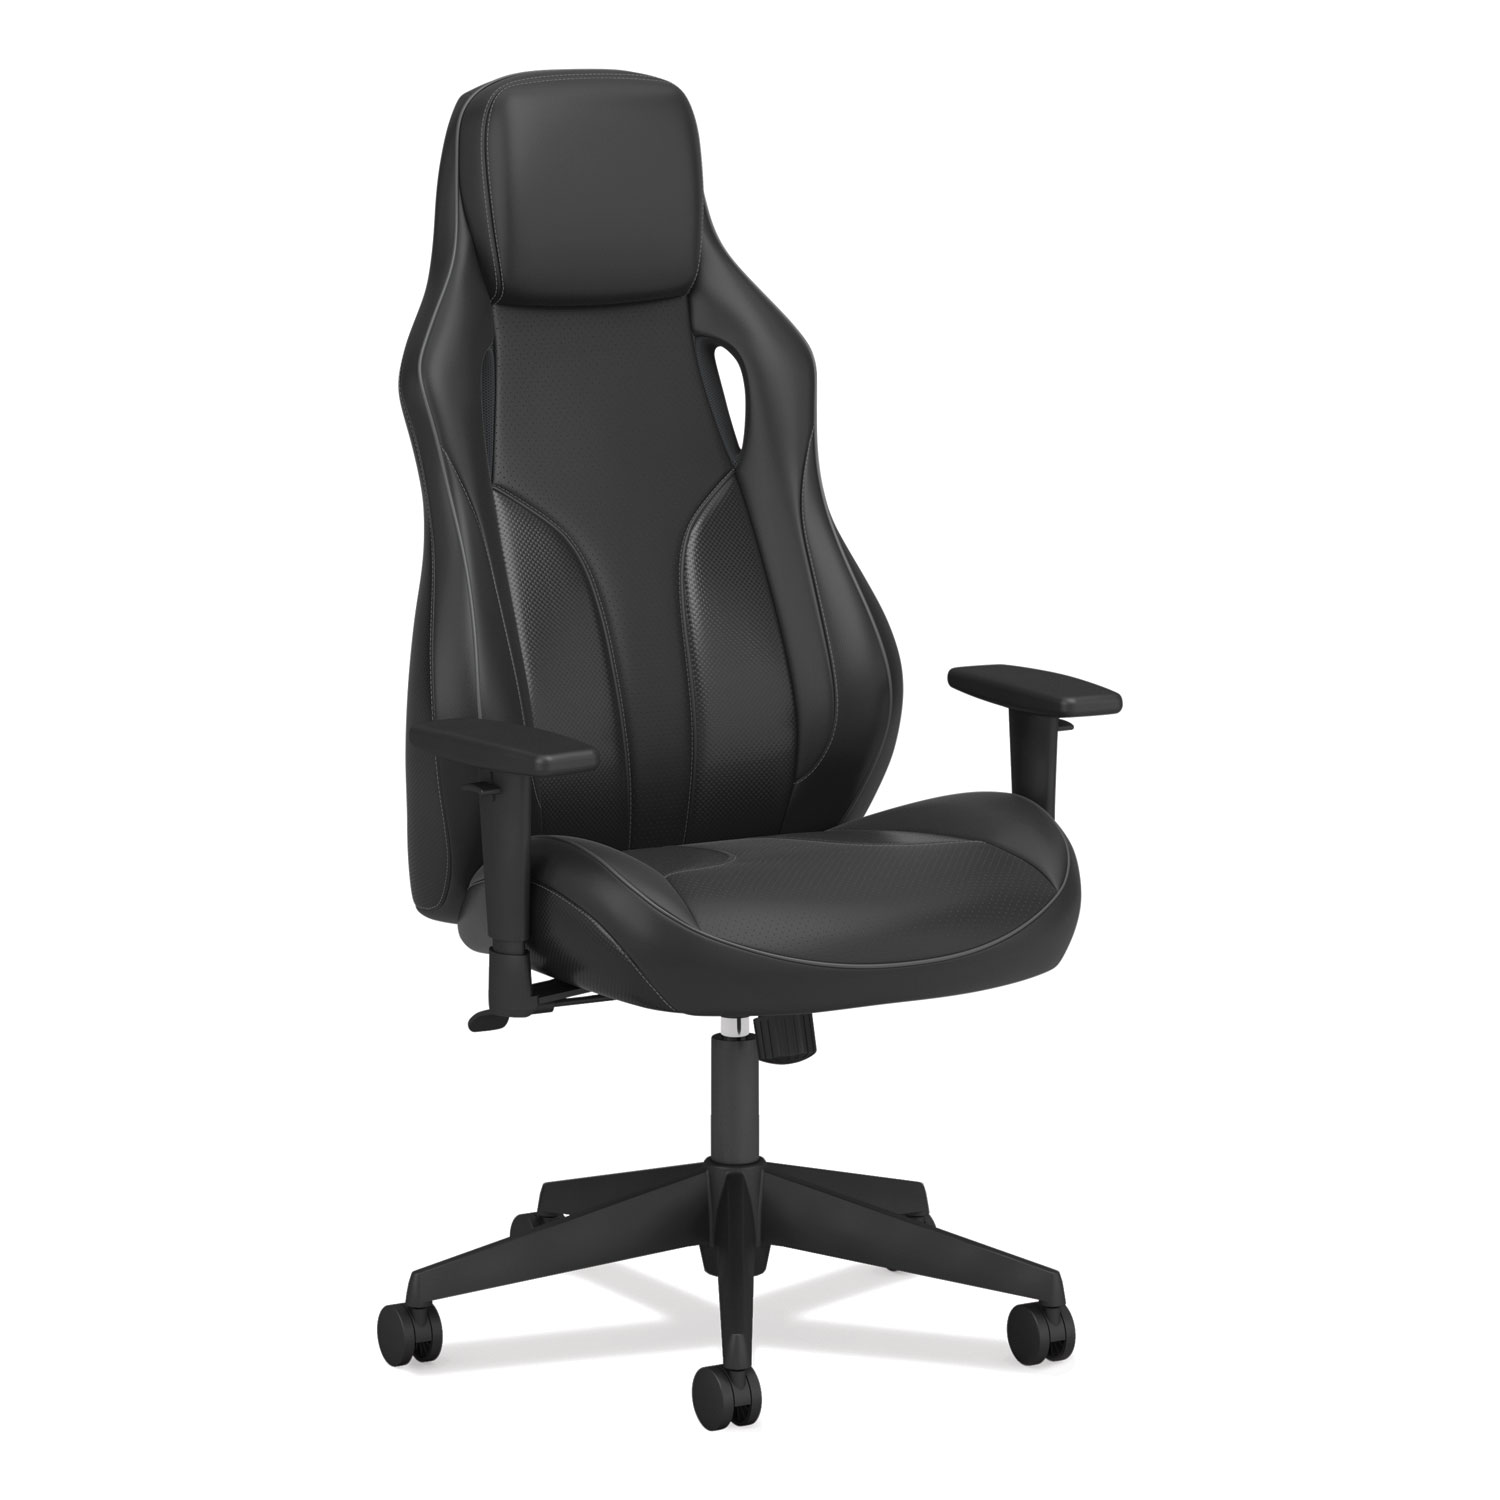  HON HONVL149SB11 Ryder Executive High-Back Leather Chair, Supports up to 250 lbs., Black Seat/Black Back, Black Base (HONVL149SB11) 